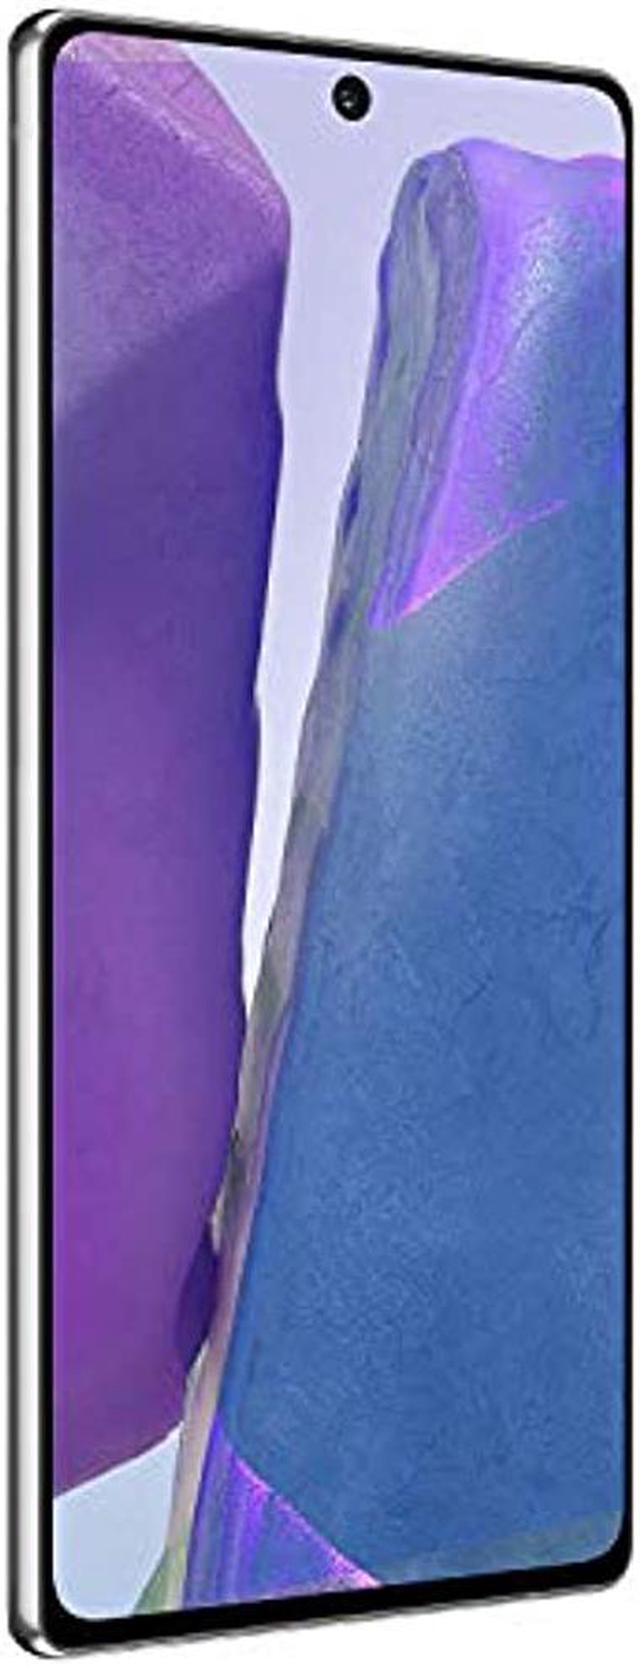 Samsung Galaxy Note 20 5G- Unlocked Phone - 128GB (Grey) Cell